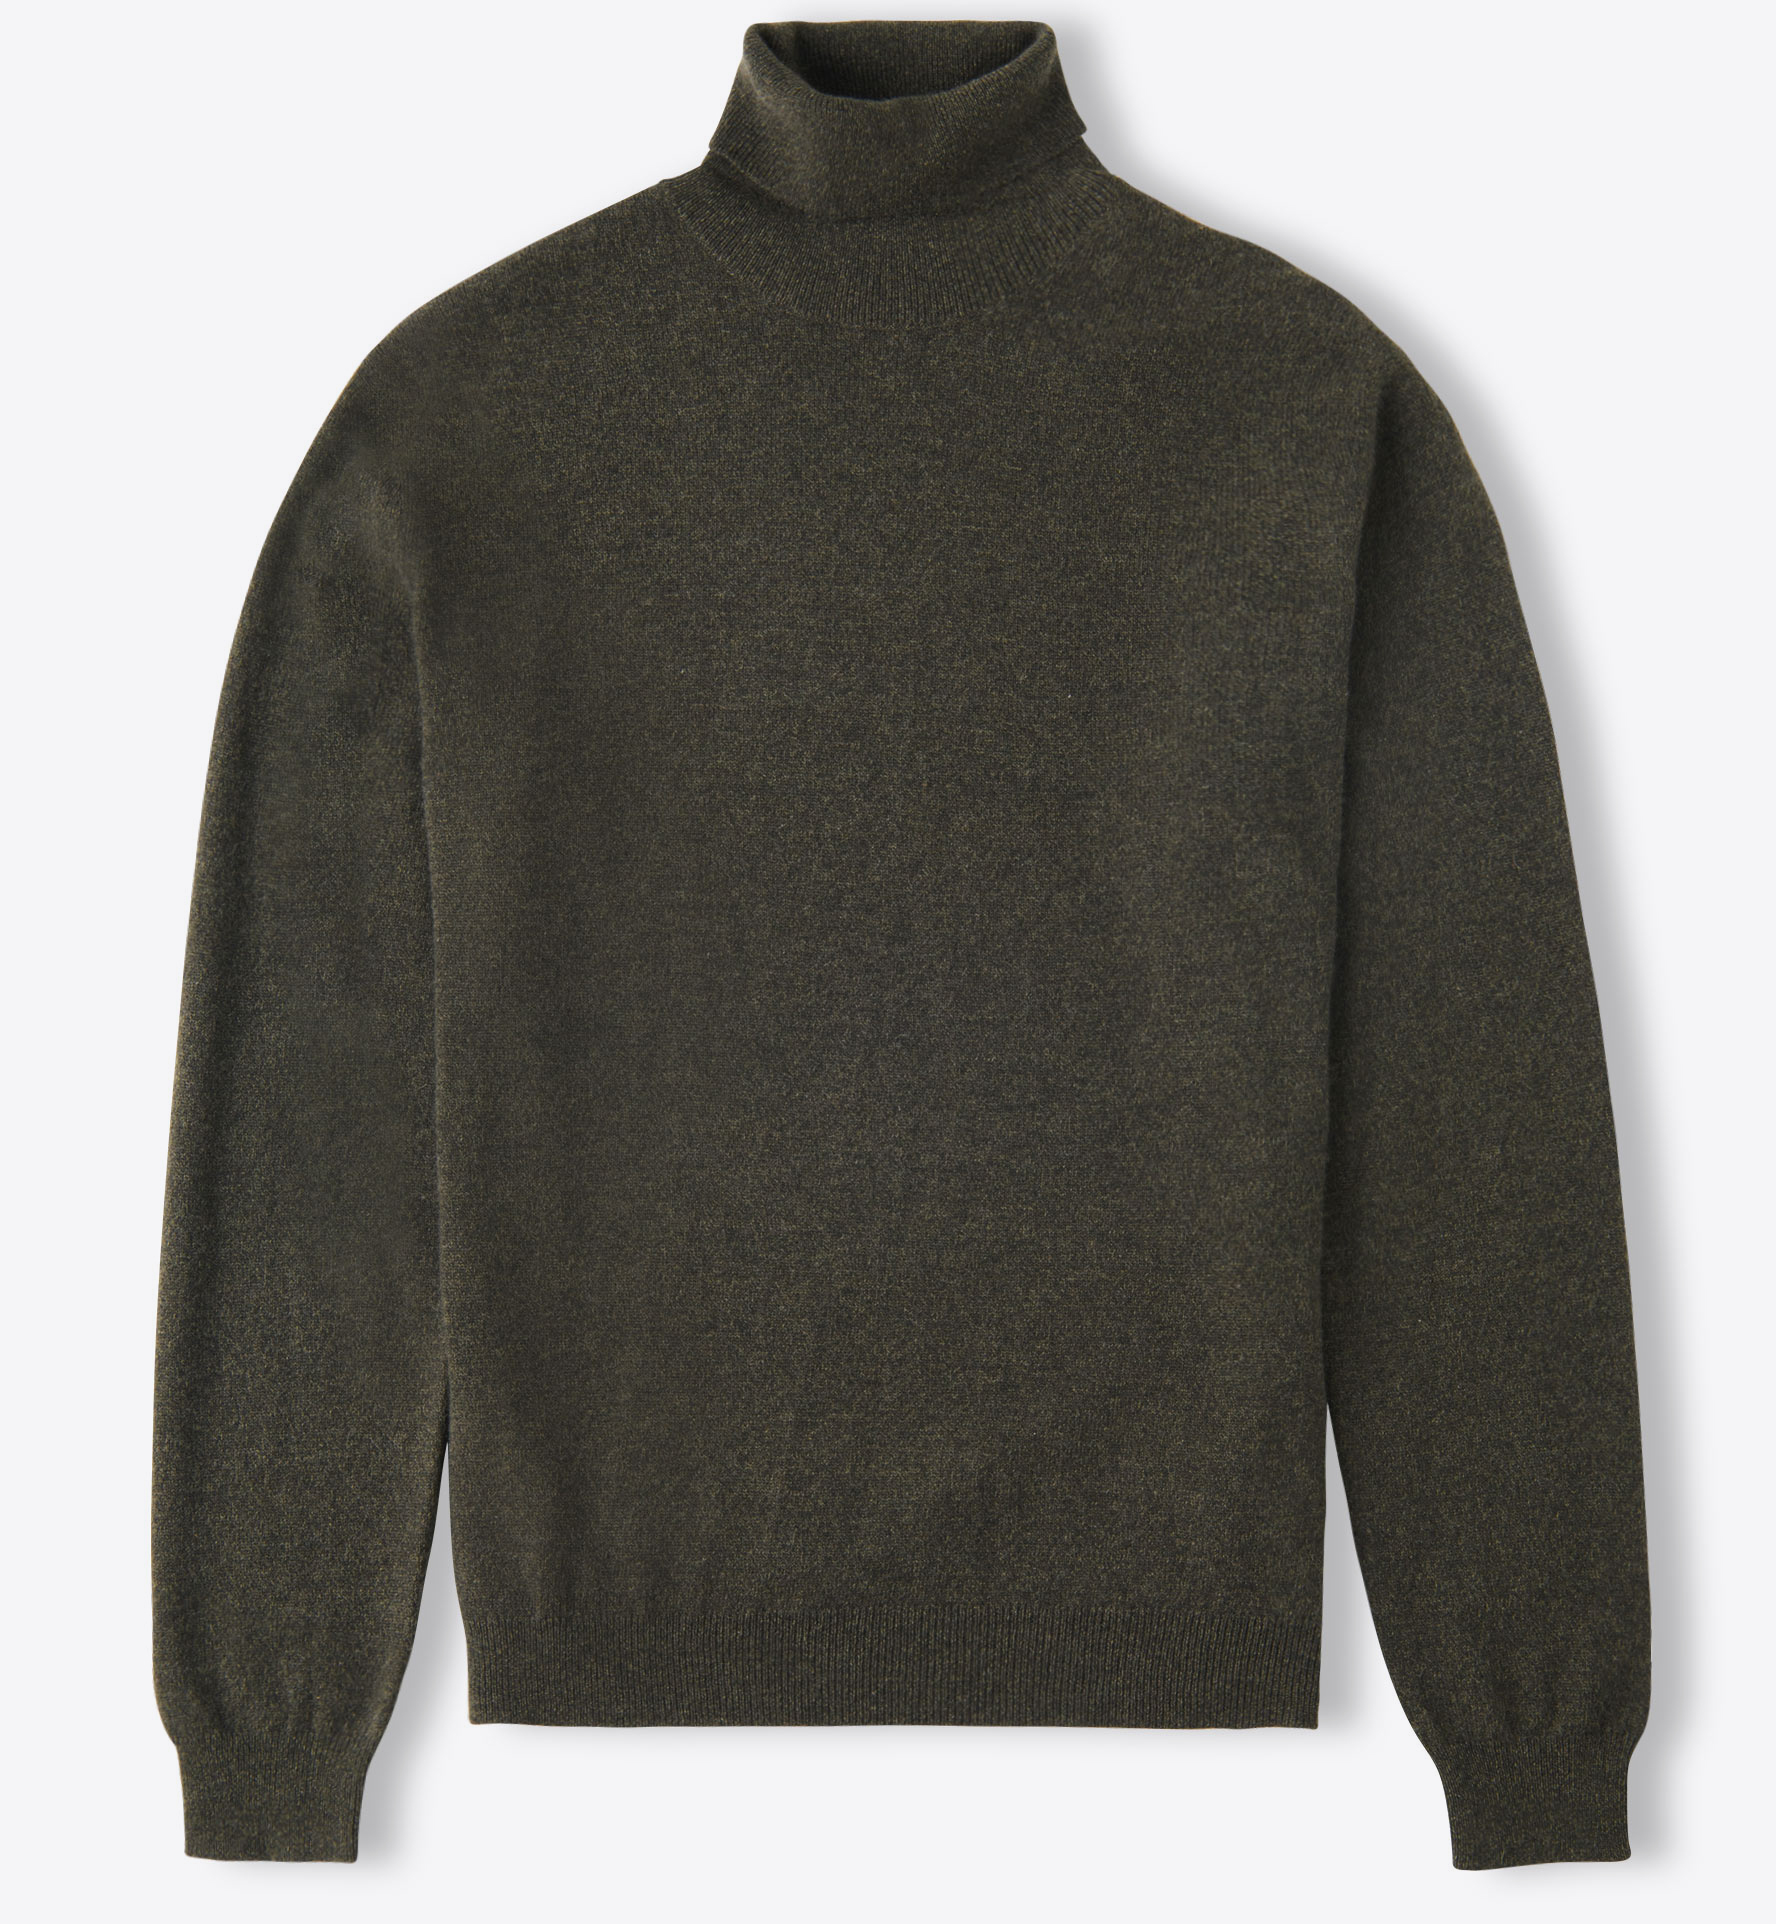 Crewneck Turtleneck Sweater in 5 Colors